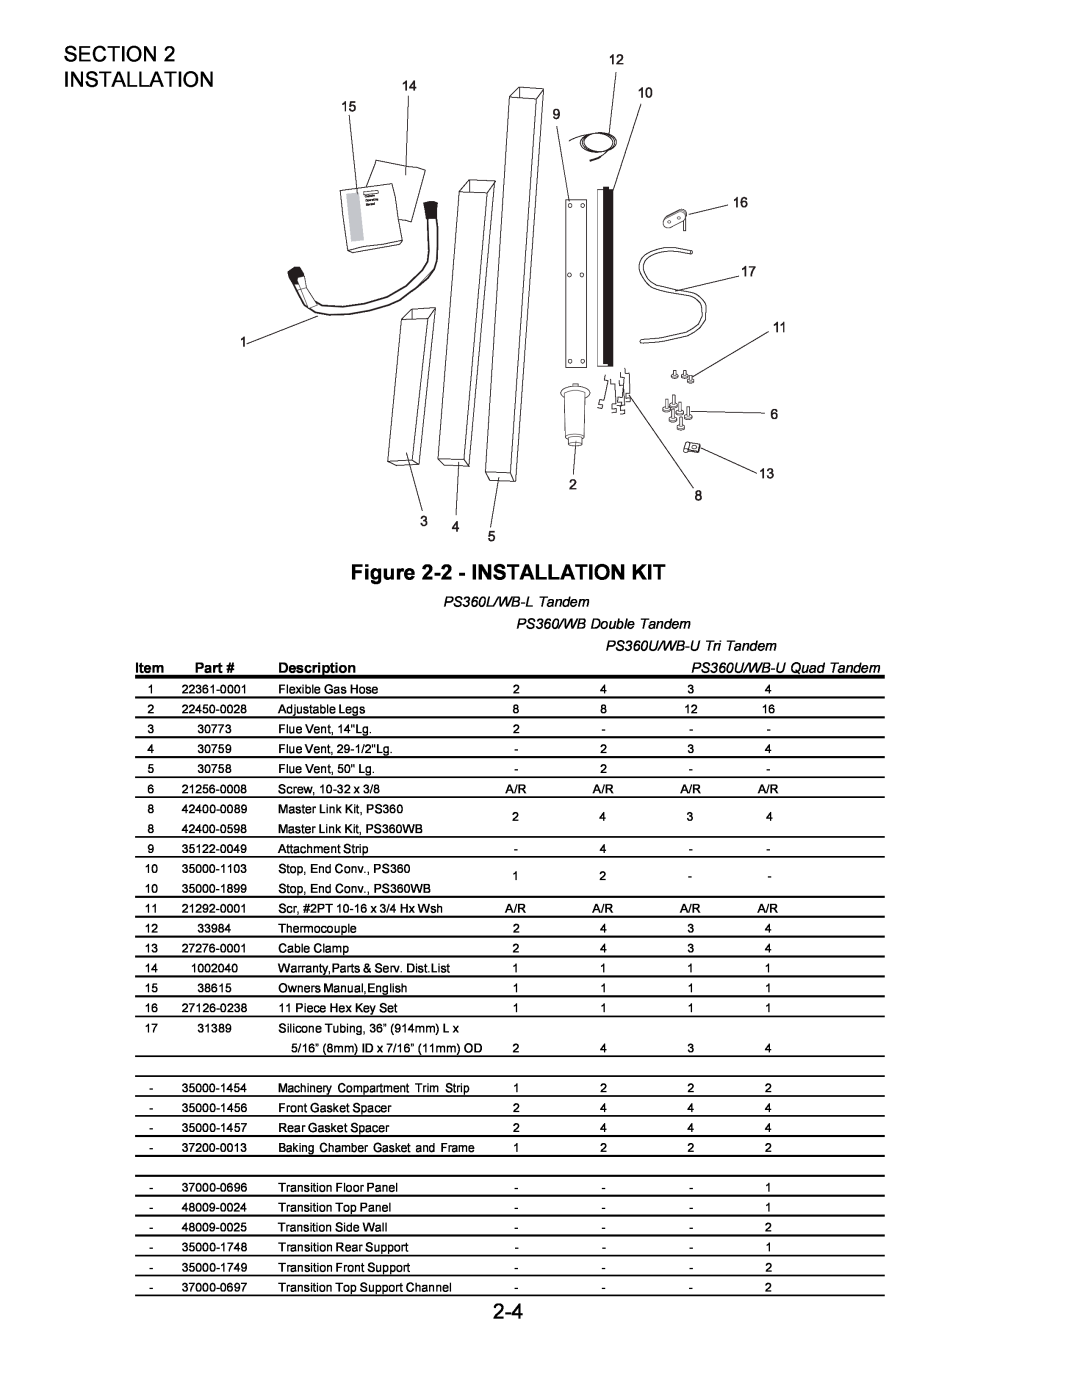 Middleby Marshall Oven owner manual 2 - INSTALLATION KIT, Section Installation, Description, PS360U/WB-U Quad Tandem 